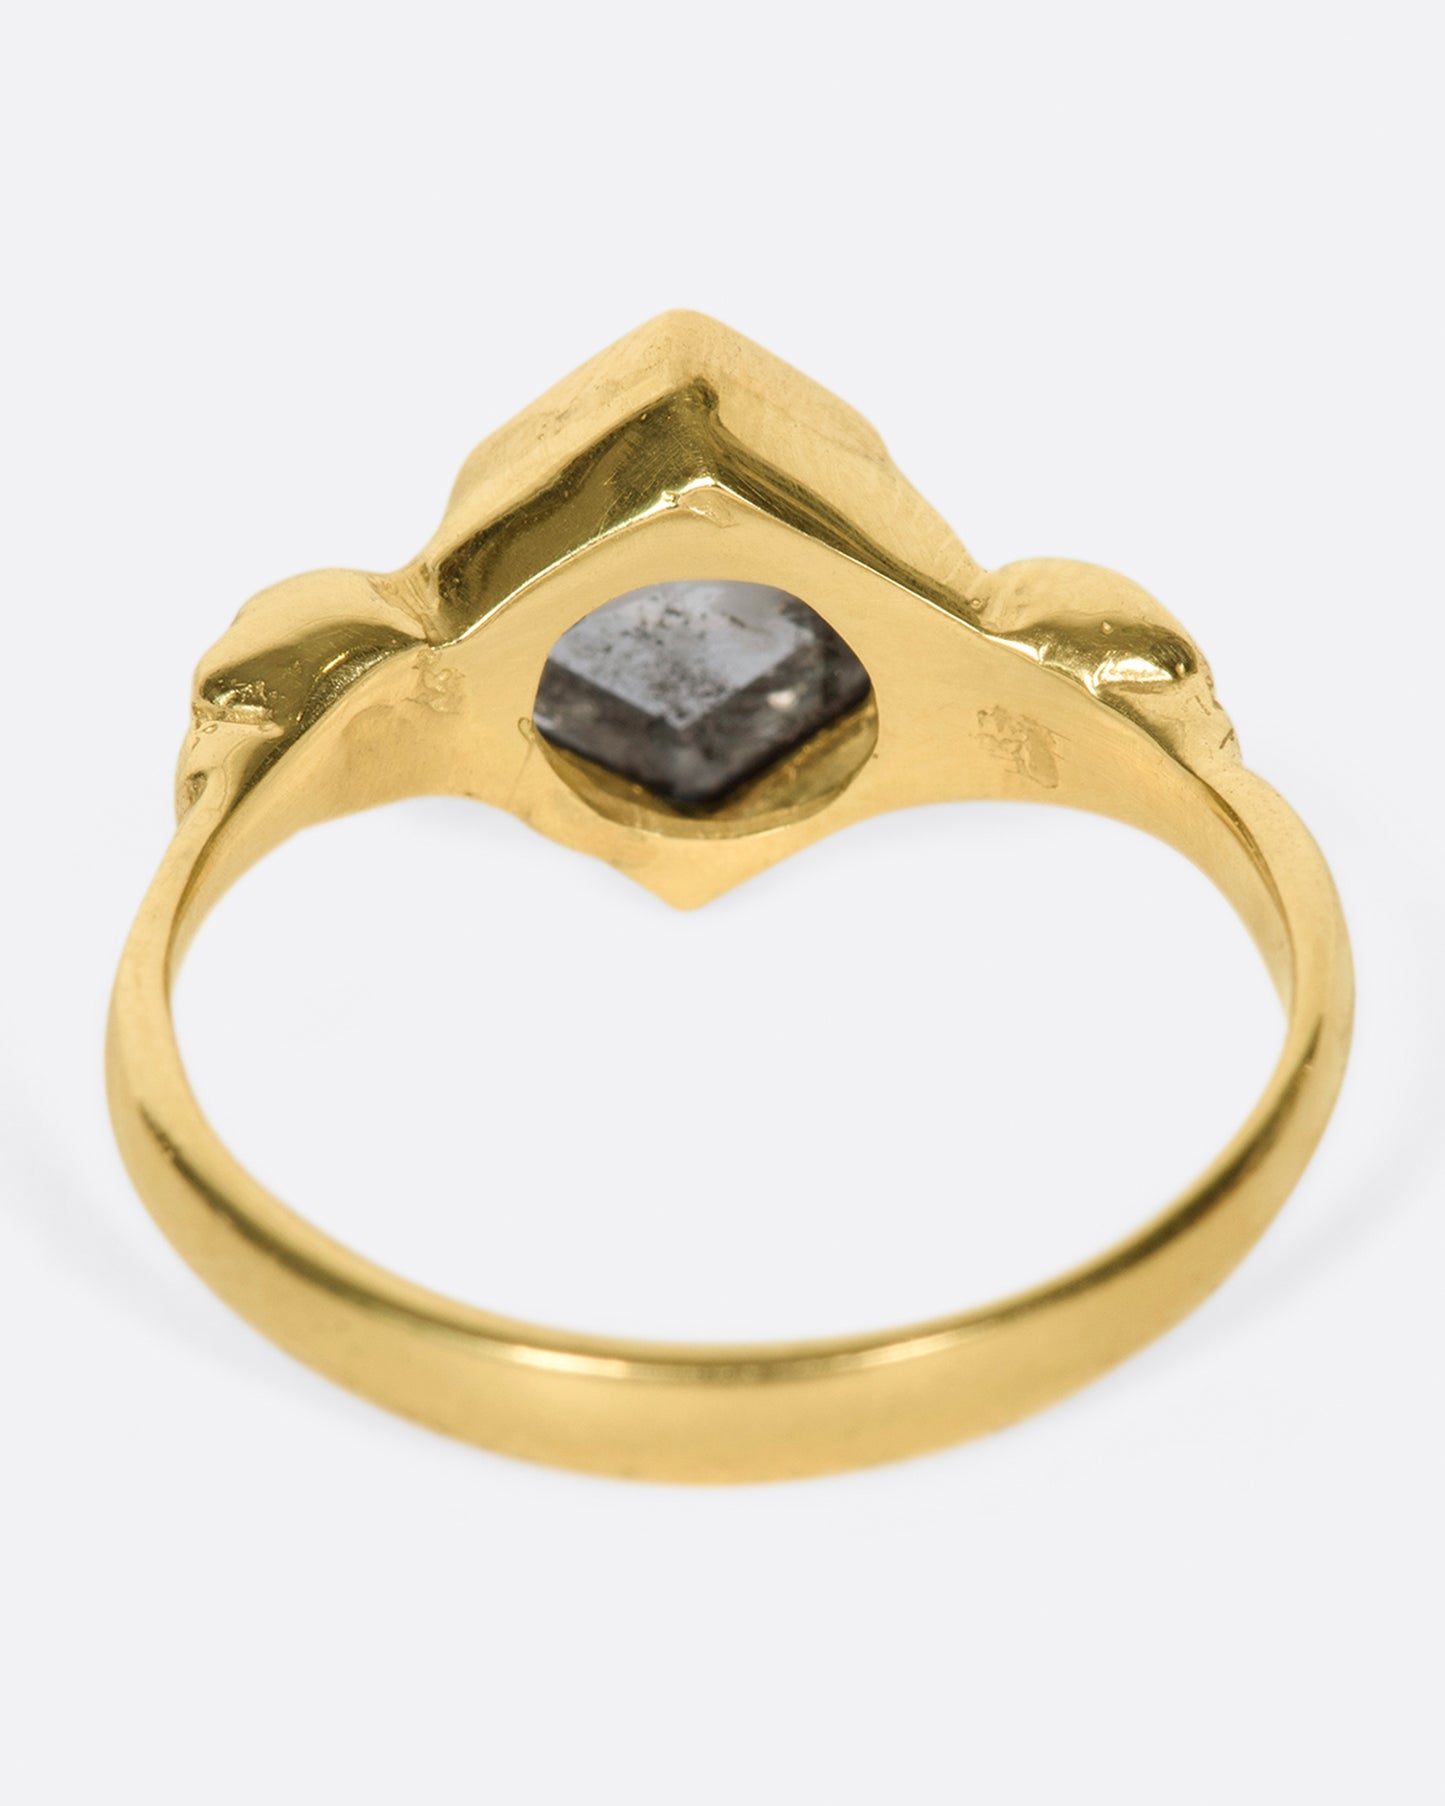 A bezel set, hexagonal, salt & pepper diamond ring with skulls on either side.